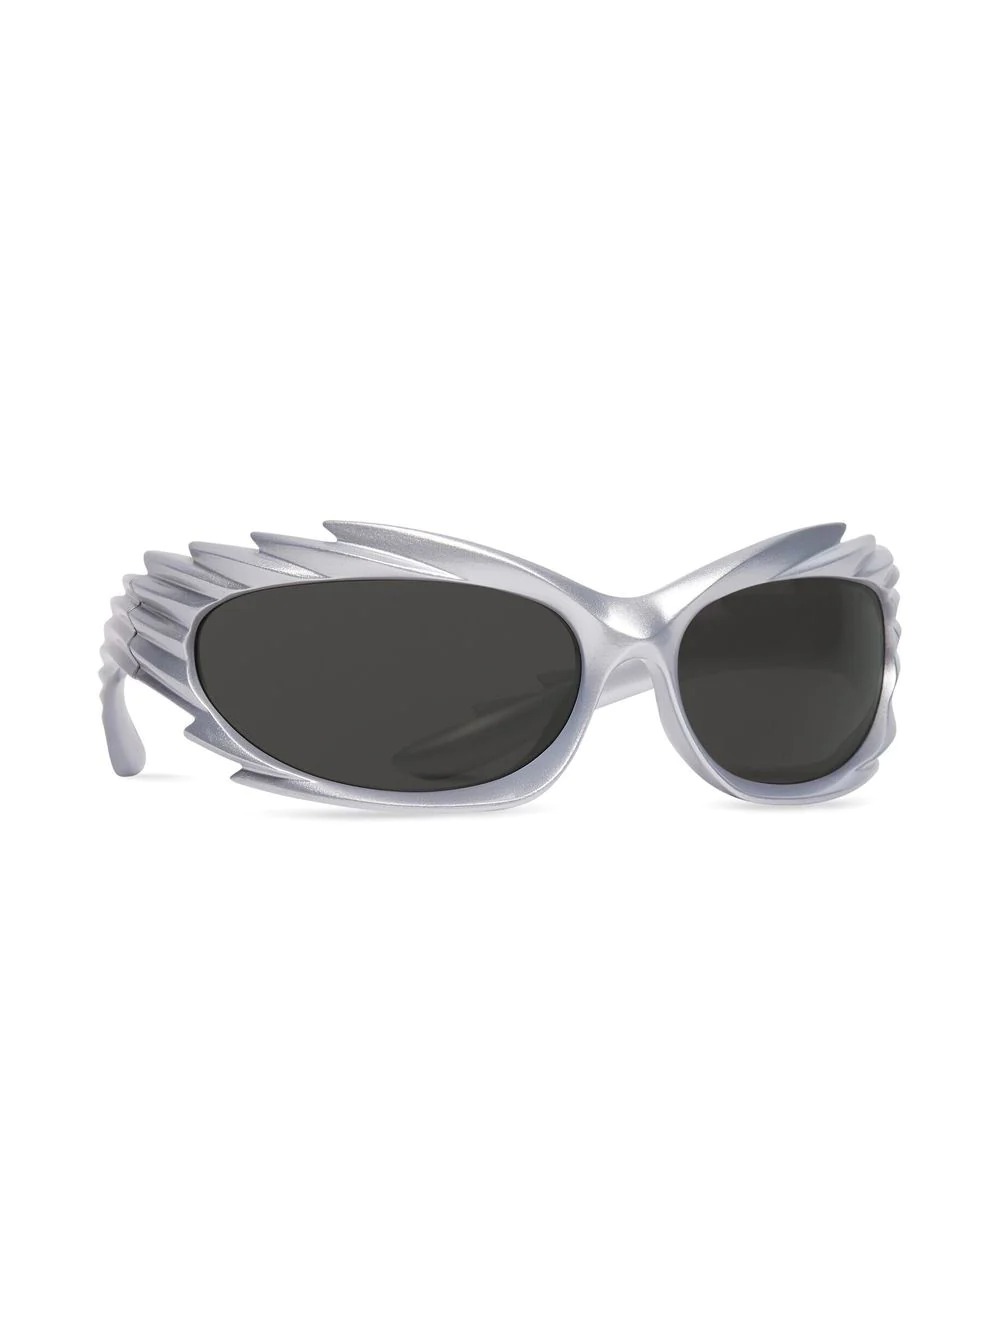 Details more than 149 biker style sunglasses